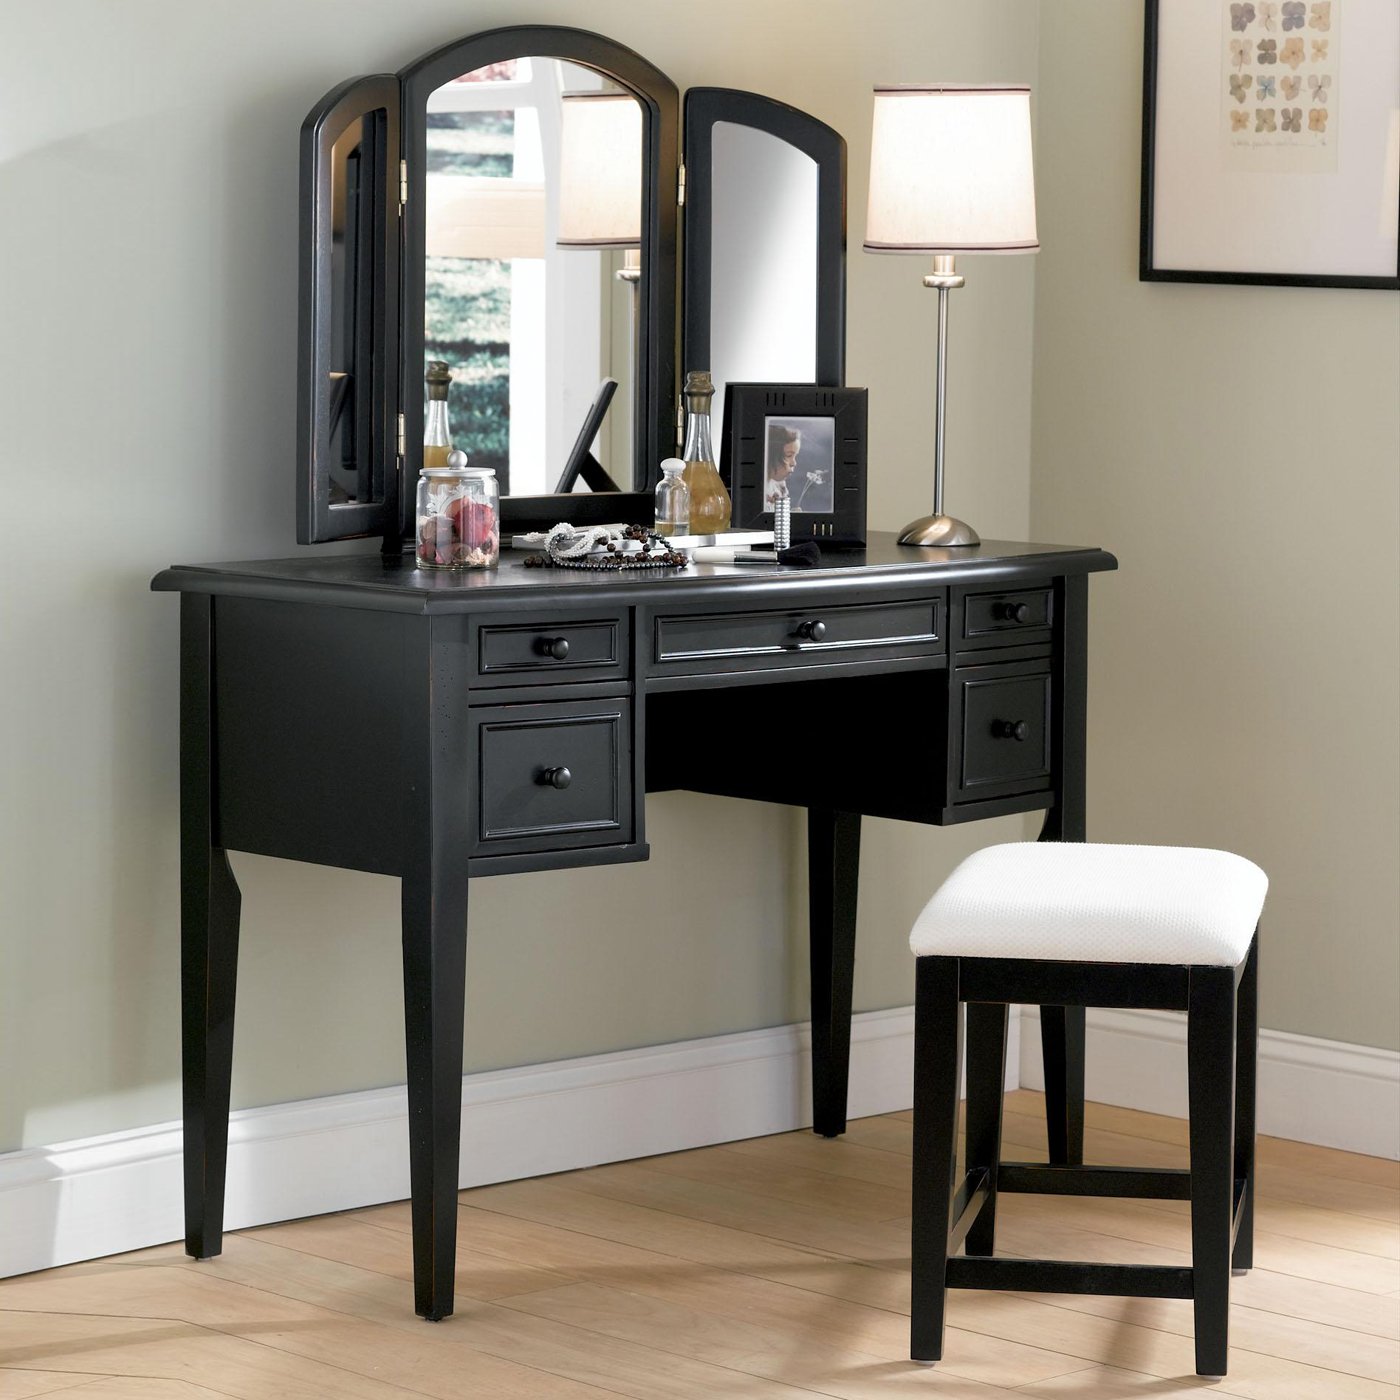 full size of bedroom:small vanity desk bedroom vanity with lights cheap BJHLNBW